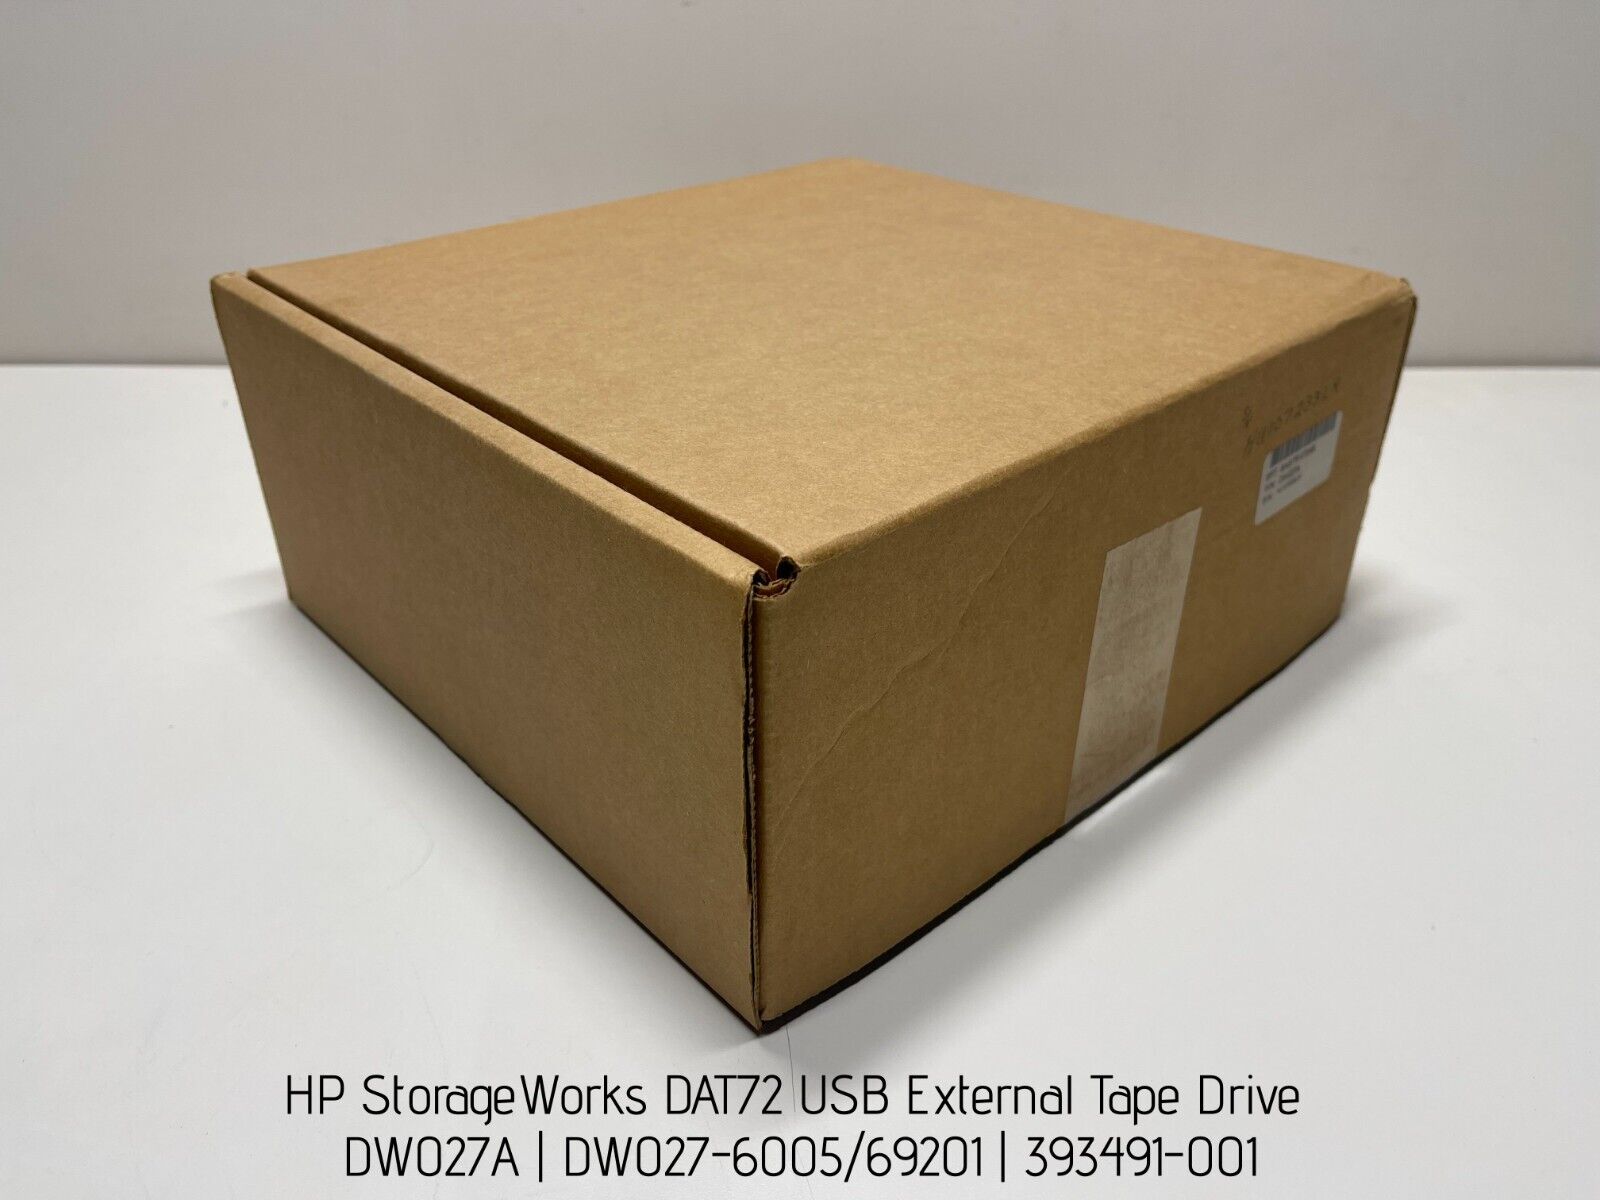 HP StorageWorks DAT72 USB External Tape Drive DW027A DW027-6005/69201 393491-001